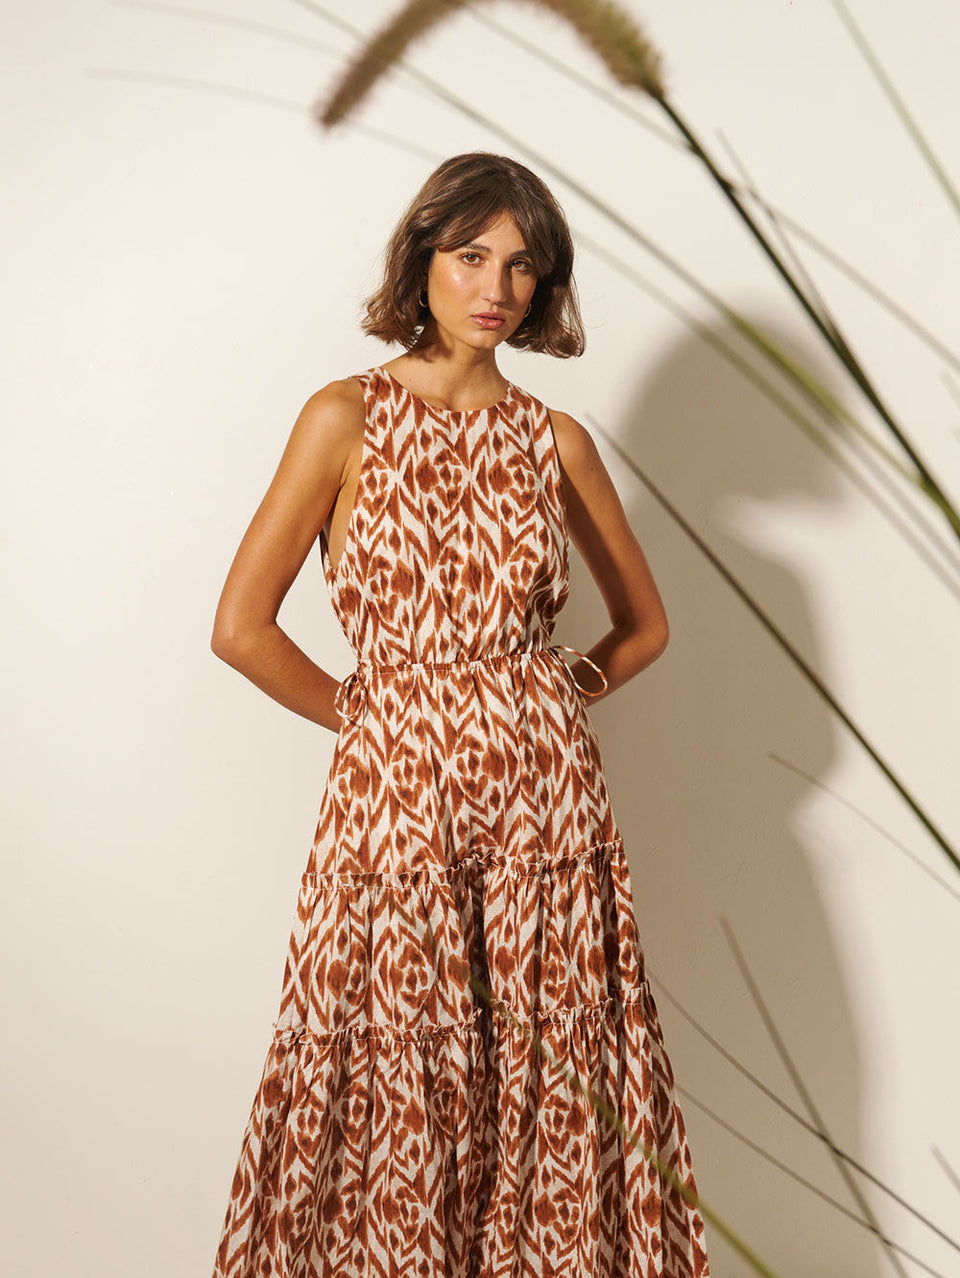 Marisa Cut Out Maxi Dress KIVARI | Model wears brown and ivory aztek printed cut out maxi dress